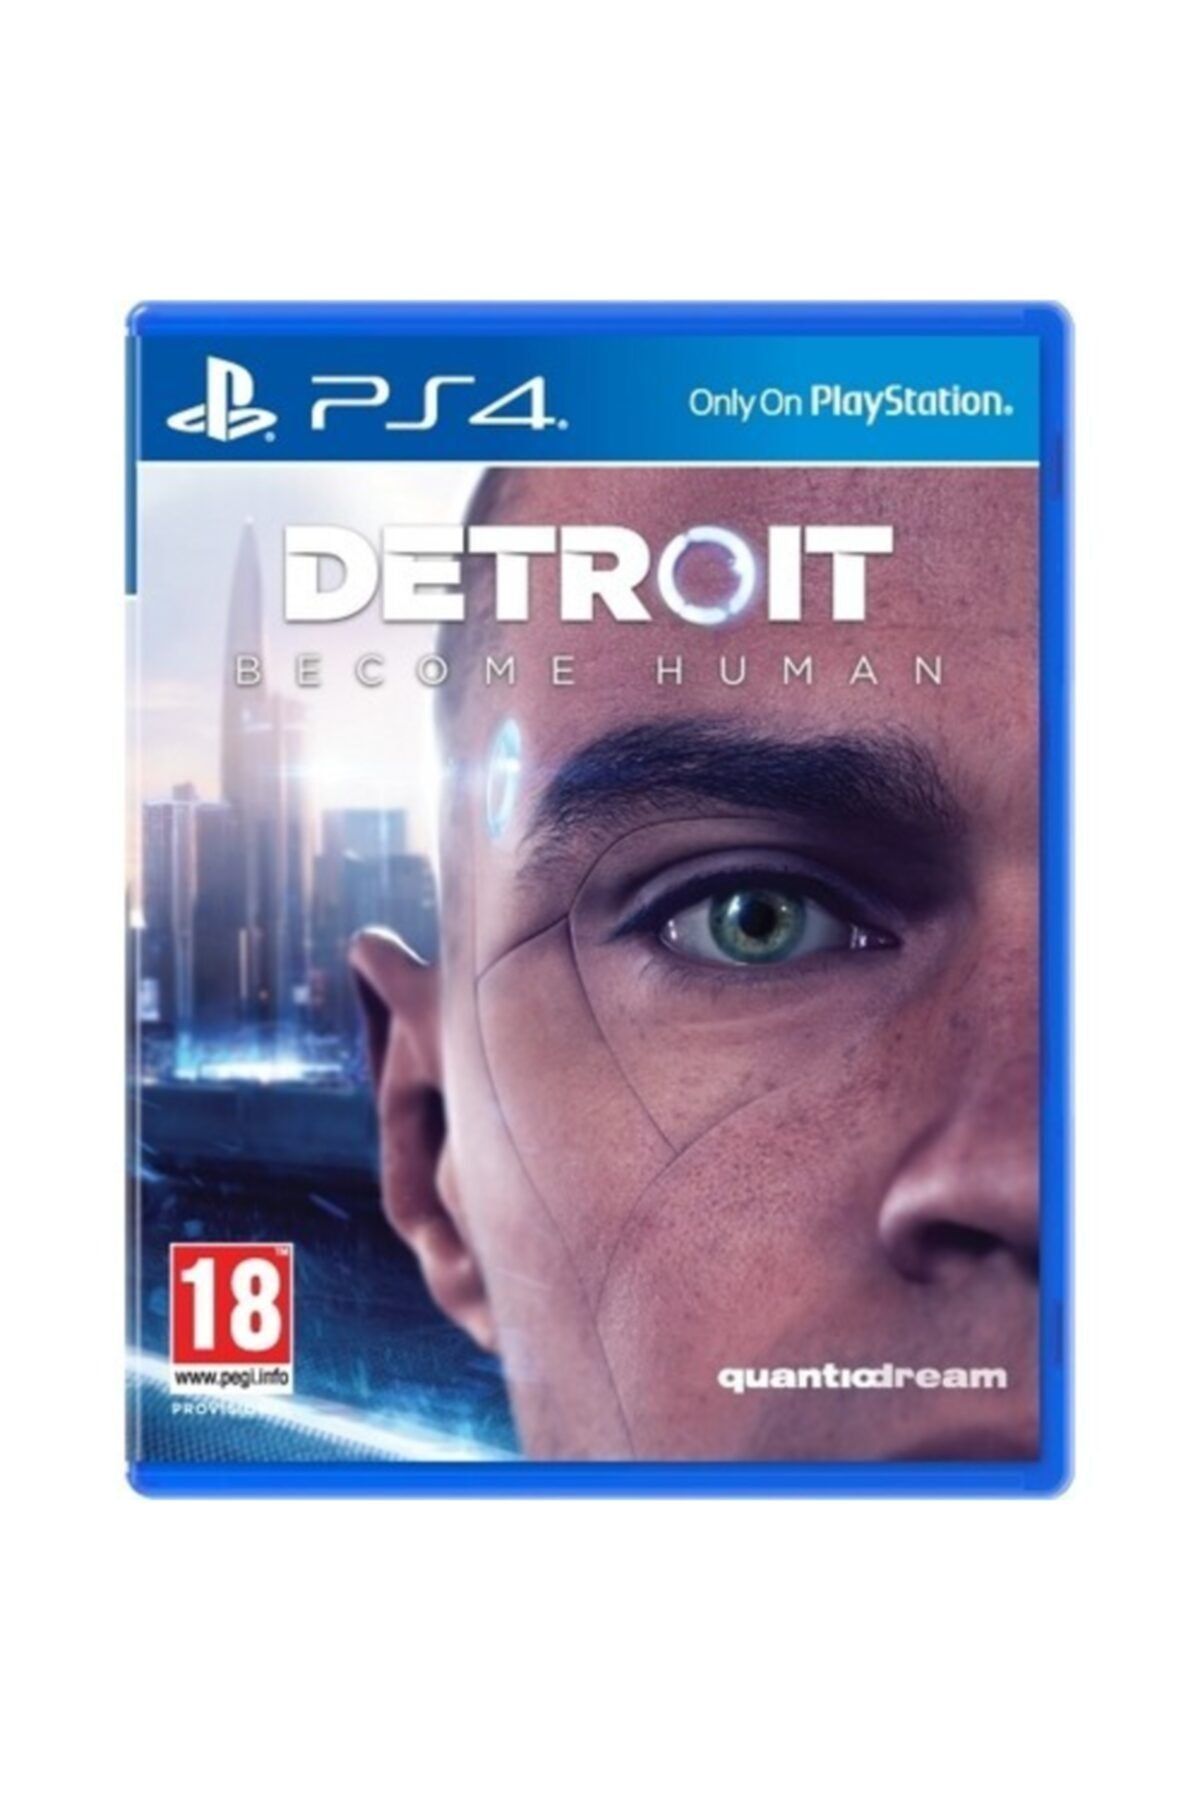 Quantiodream Detroit Become Human - Ps4 Orjinal Kutulu Oyun Tam Sürüm